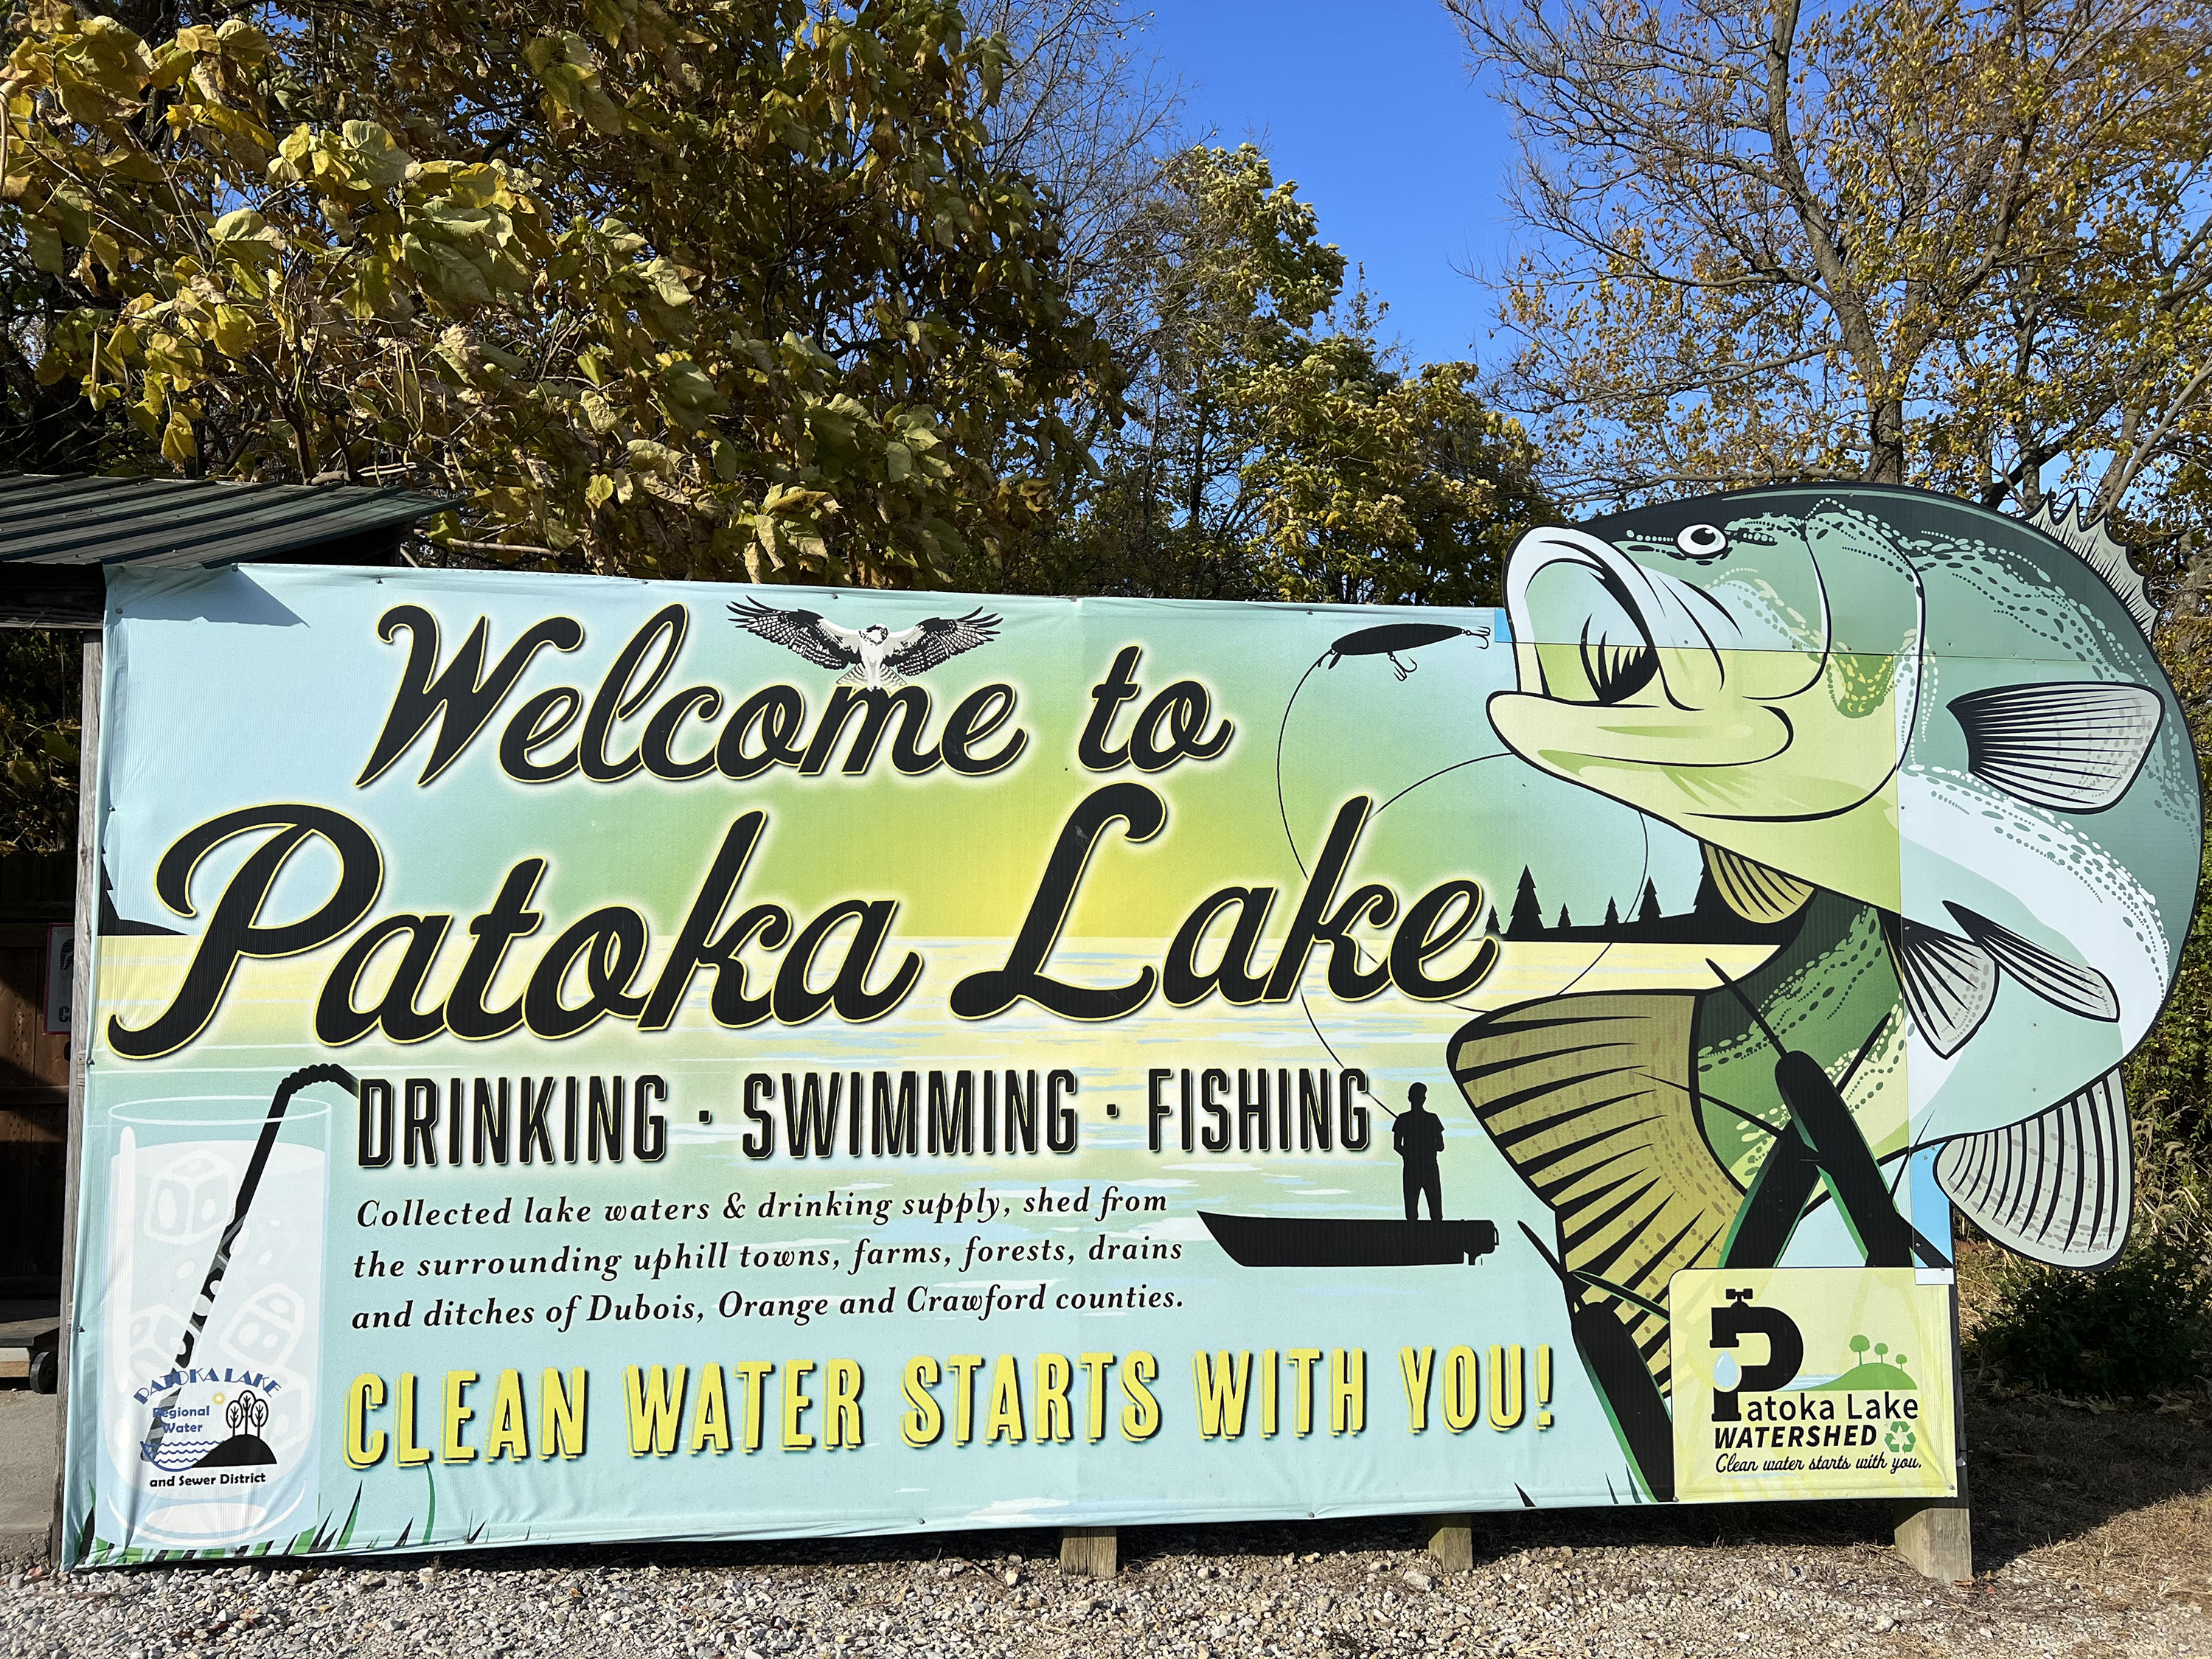 A sign for Patoka Lake